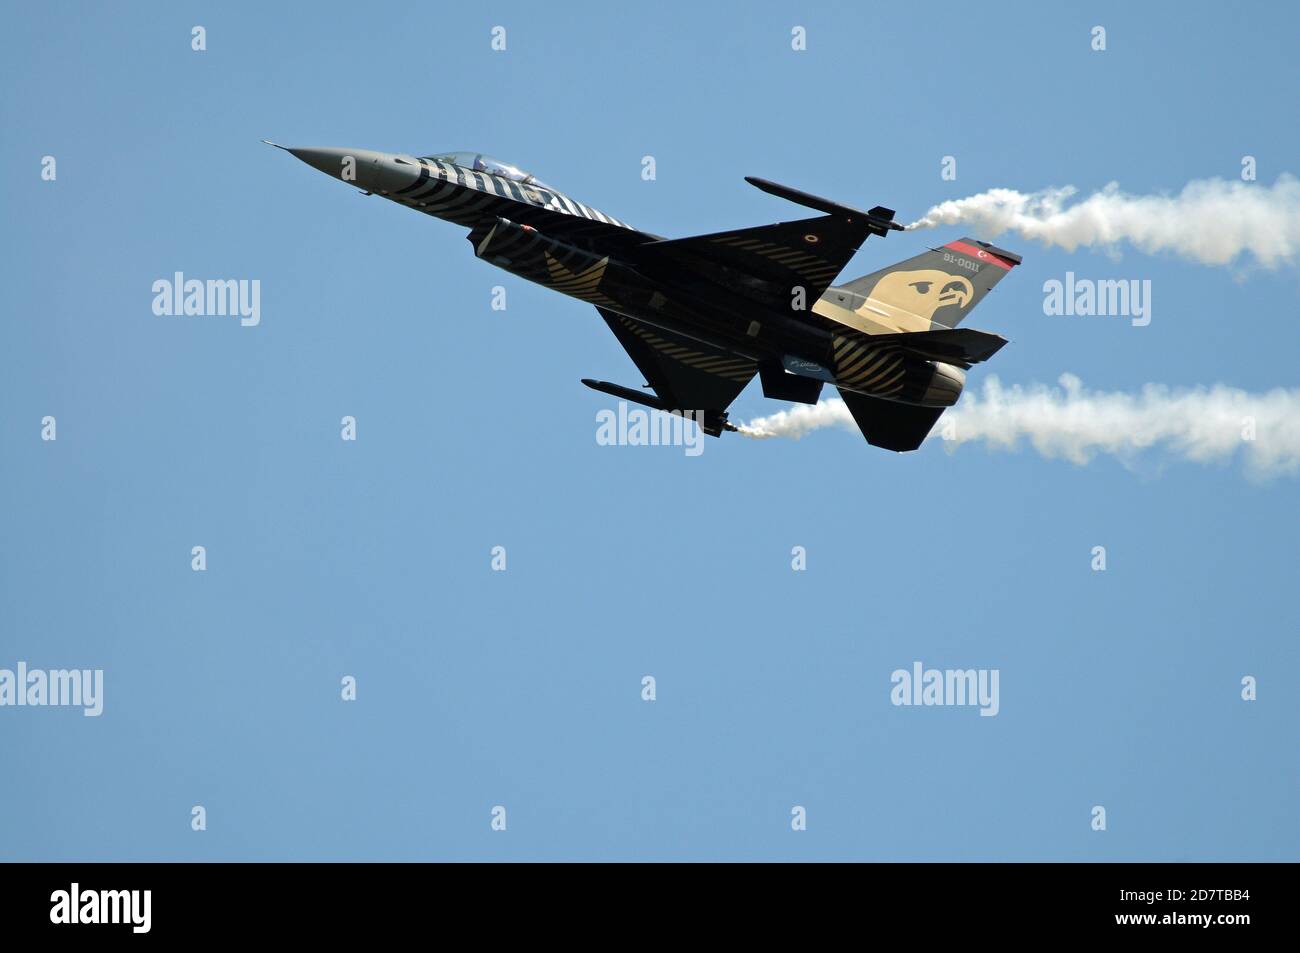 Air Force turca F-16 "Falcon". Foto Stock